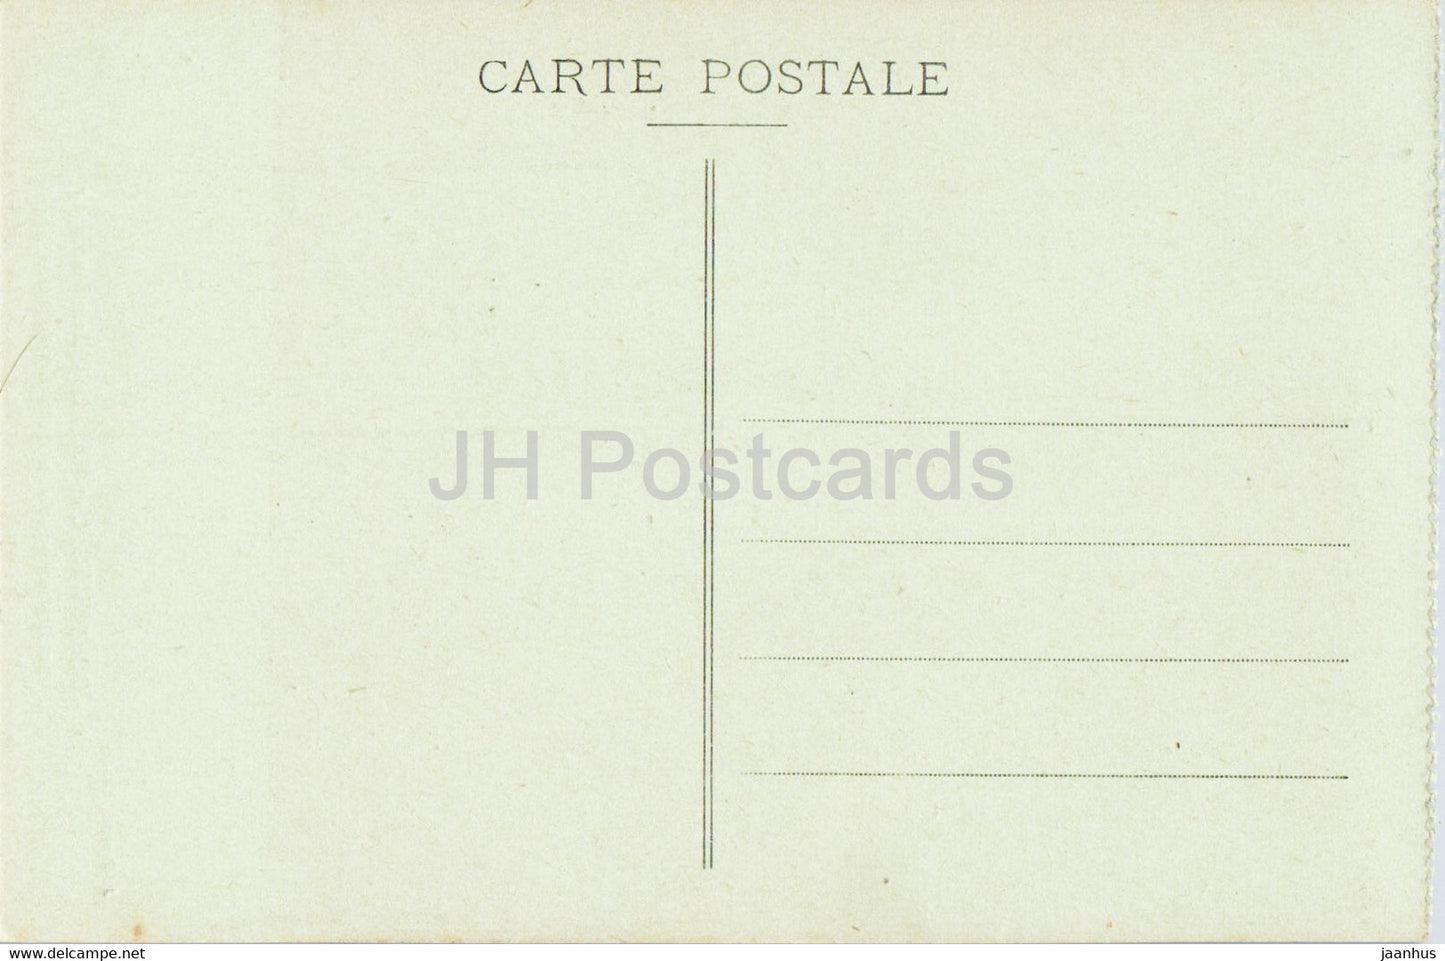 Combourg - Le Chateau interieur - La Bibliotheque - Bibliothek - Schloss - 30 - alte Postkarte - Frankreich - unbenutzt